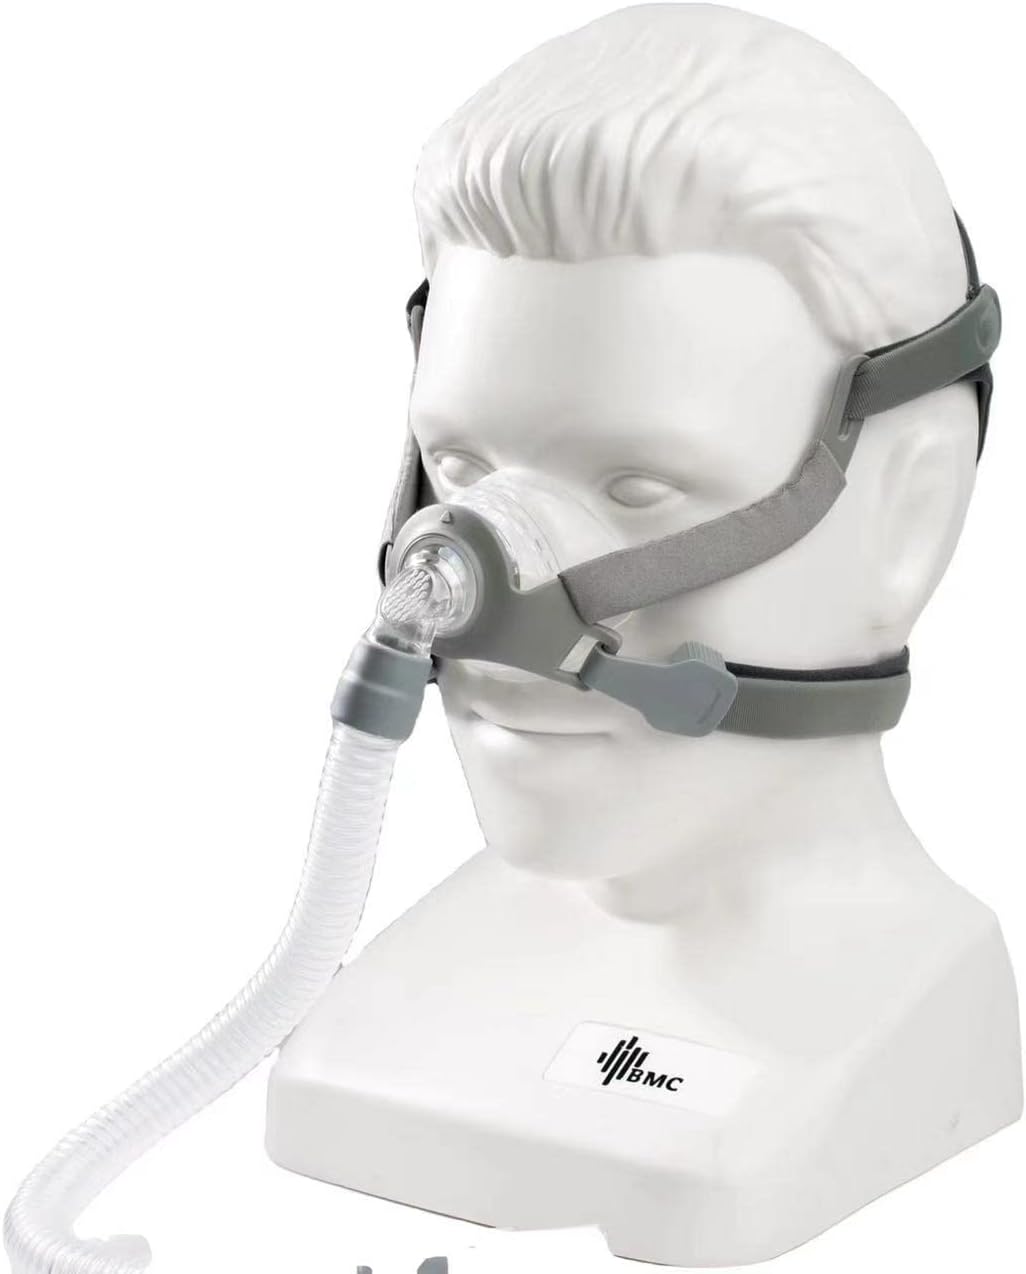 BMC N5B Nasal Mask. Obstructive sleep apnea.